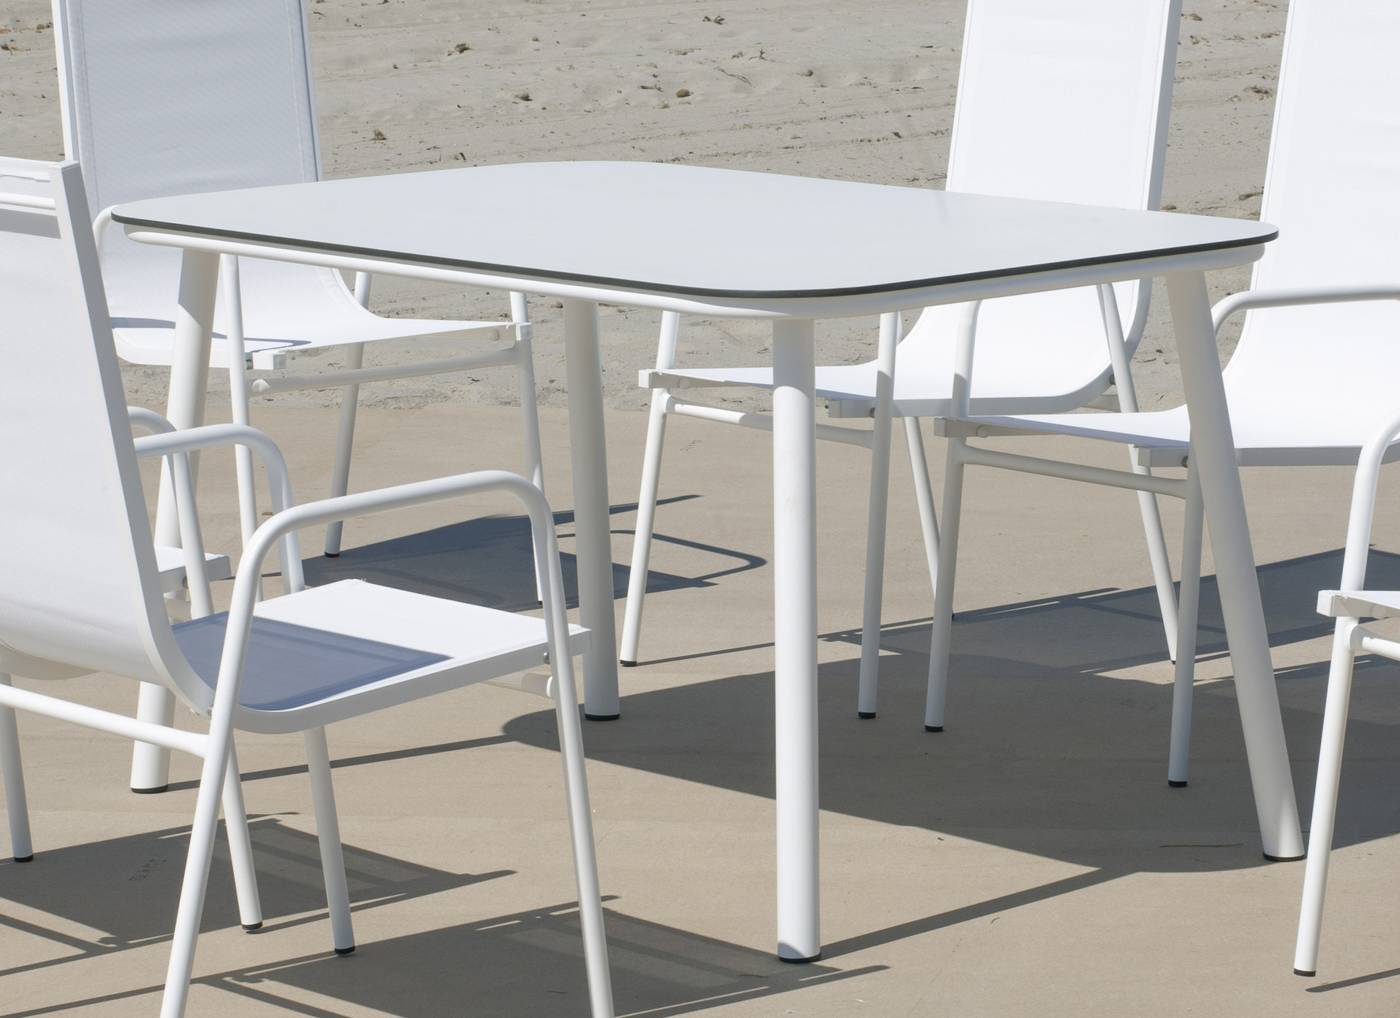 Mesa rectangular de aluminio, con pata circular y tablero HPL de 150 cm. de esquinas redondenadas. Colores: blanco o antracita.